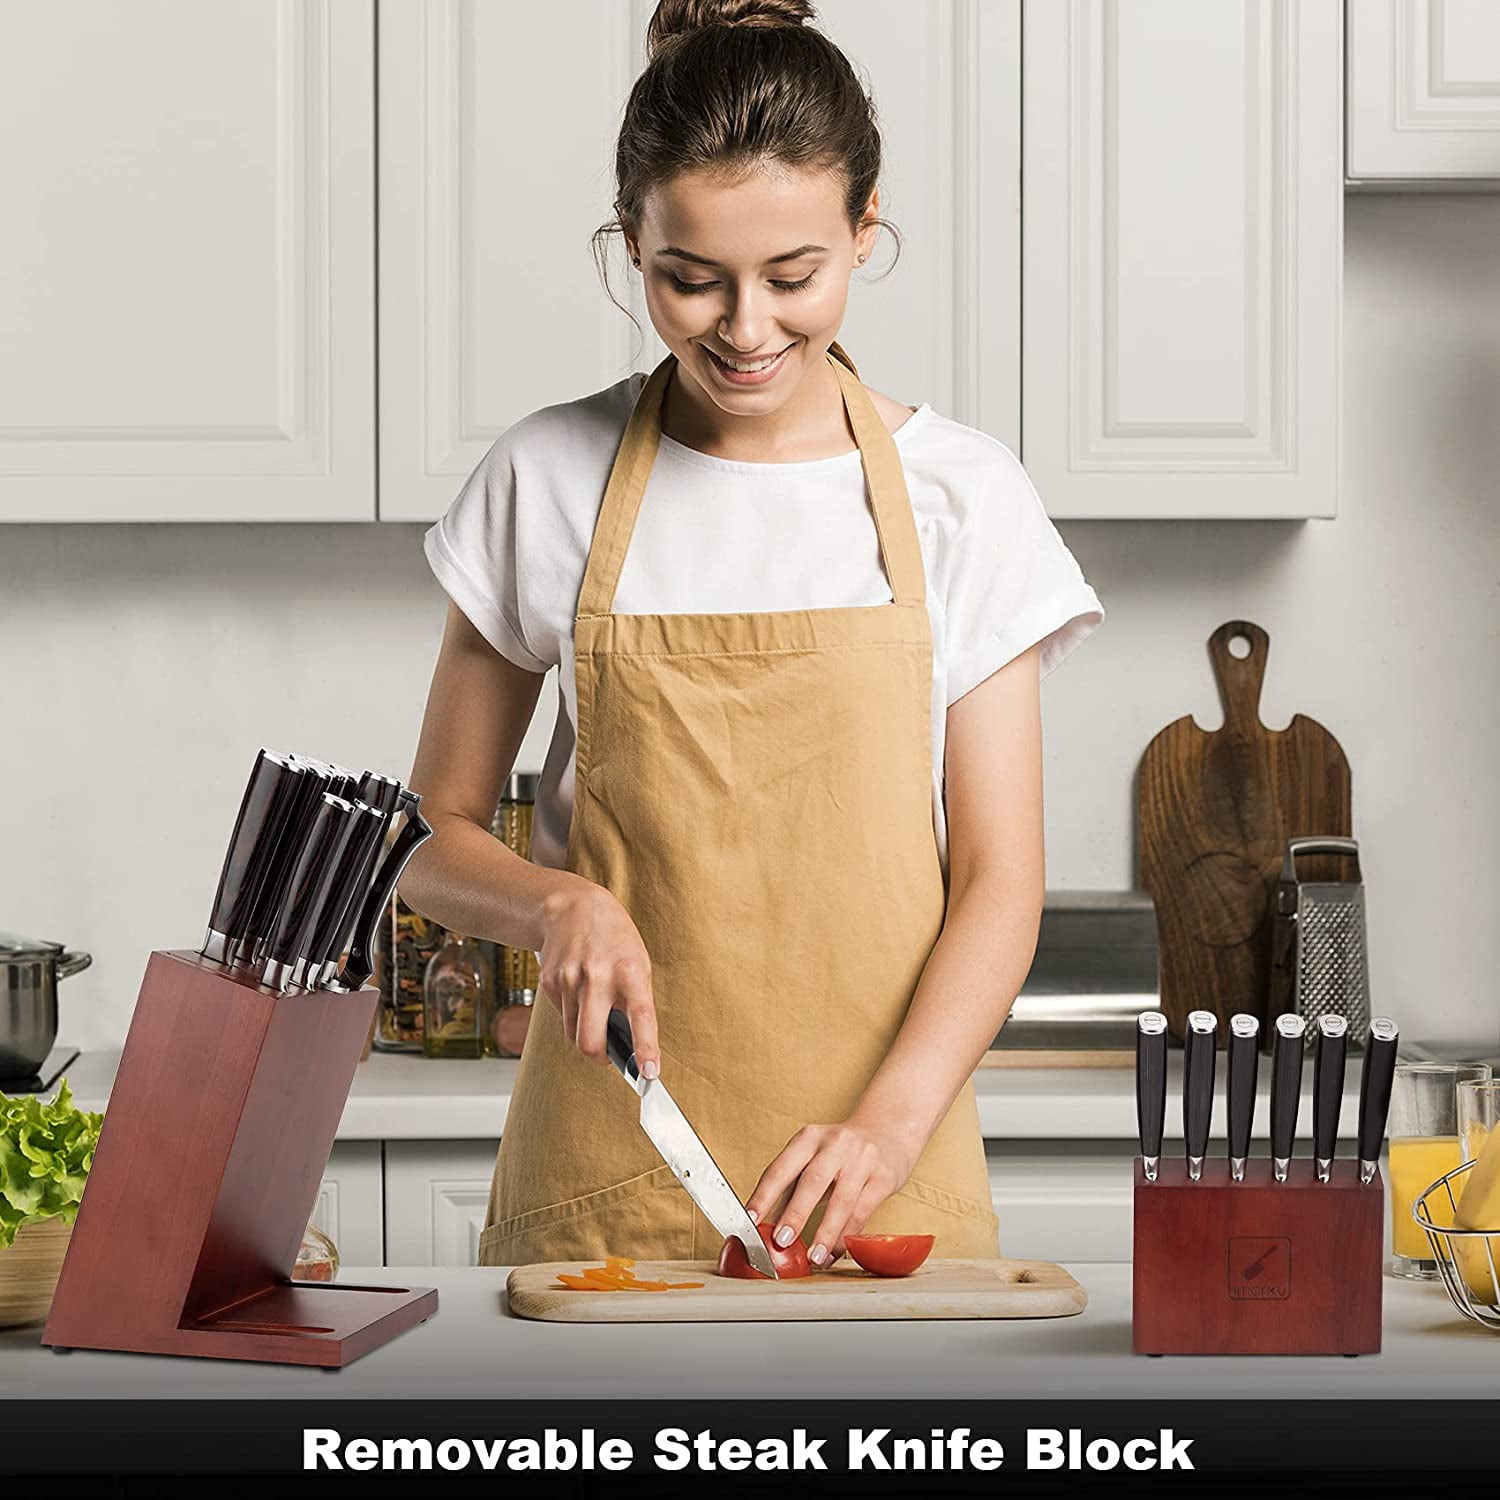  Knife Set, imarku 16 PCS Kitchen Knife Set with Block, High  Carbon Stainless Steel Ultra Sharp Knife Block Set with Hollow Handle and  Removable Block, Dishwasher Safe Kitchen Knives (Black) 